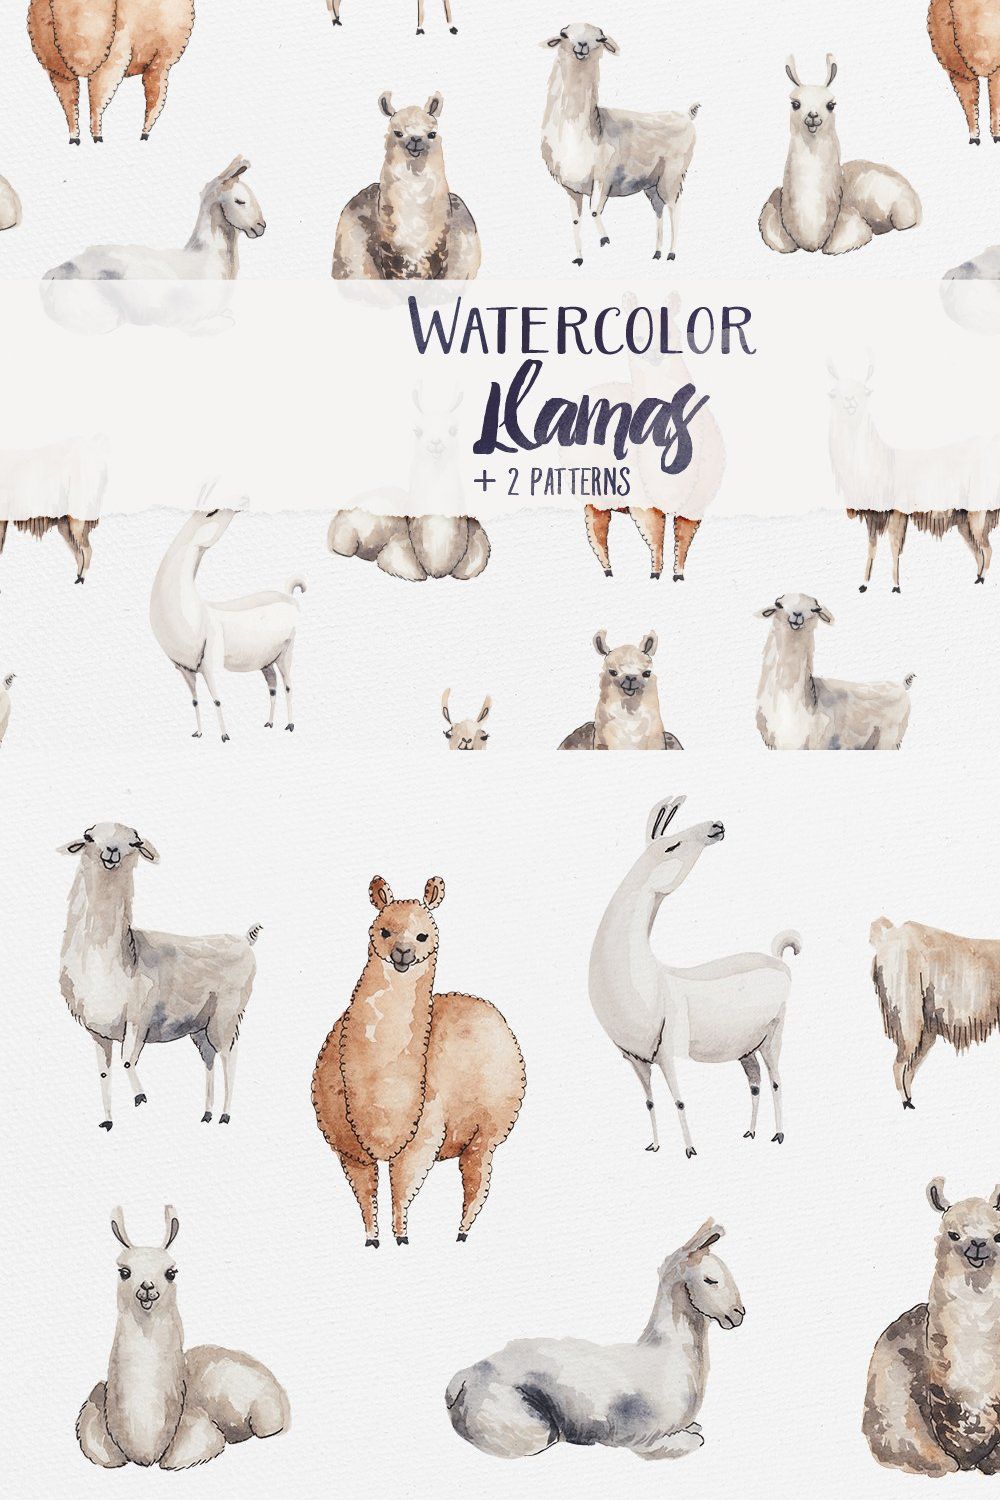 Watercolor Llamas + 2 Patterns pinterest preview image.